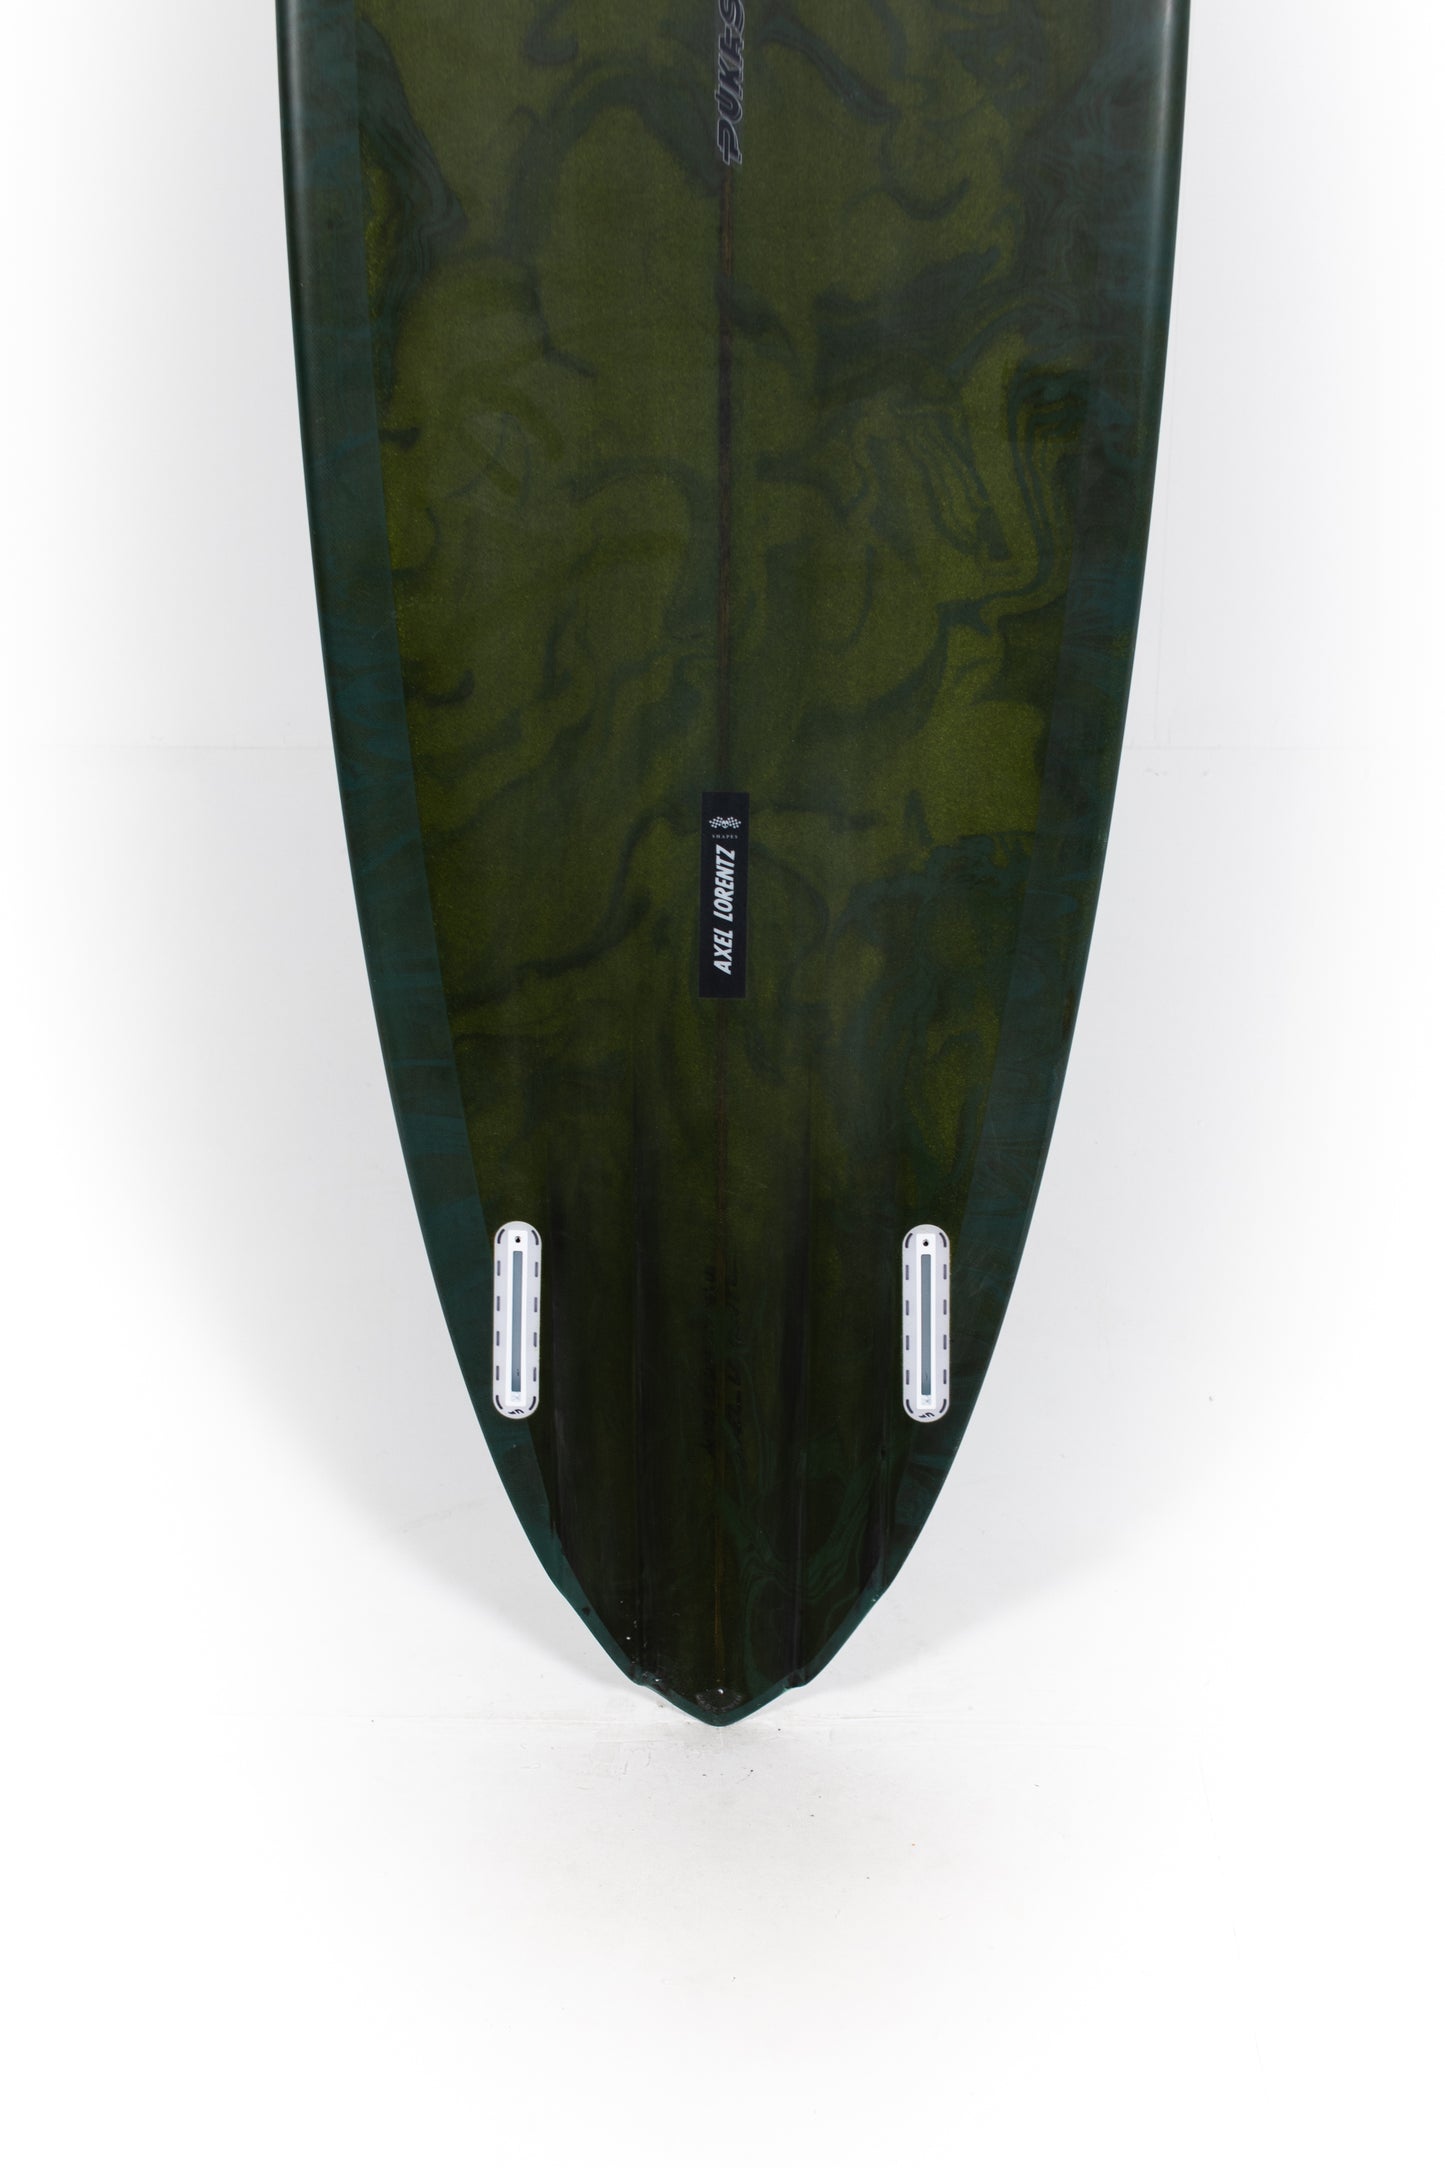 
                  
                    Pukas Surf Shop - Pukas Surfboard - LADY TWIN by Axel Lorentz - 7’0” x 21,25 x 2,94 - 46L - AX09166
                  
                